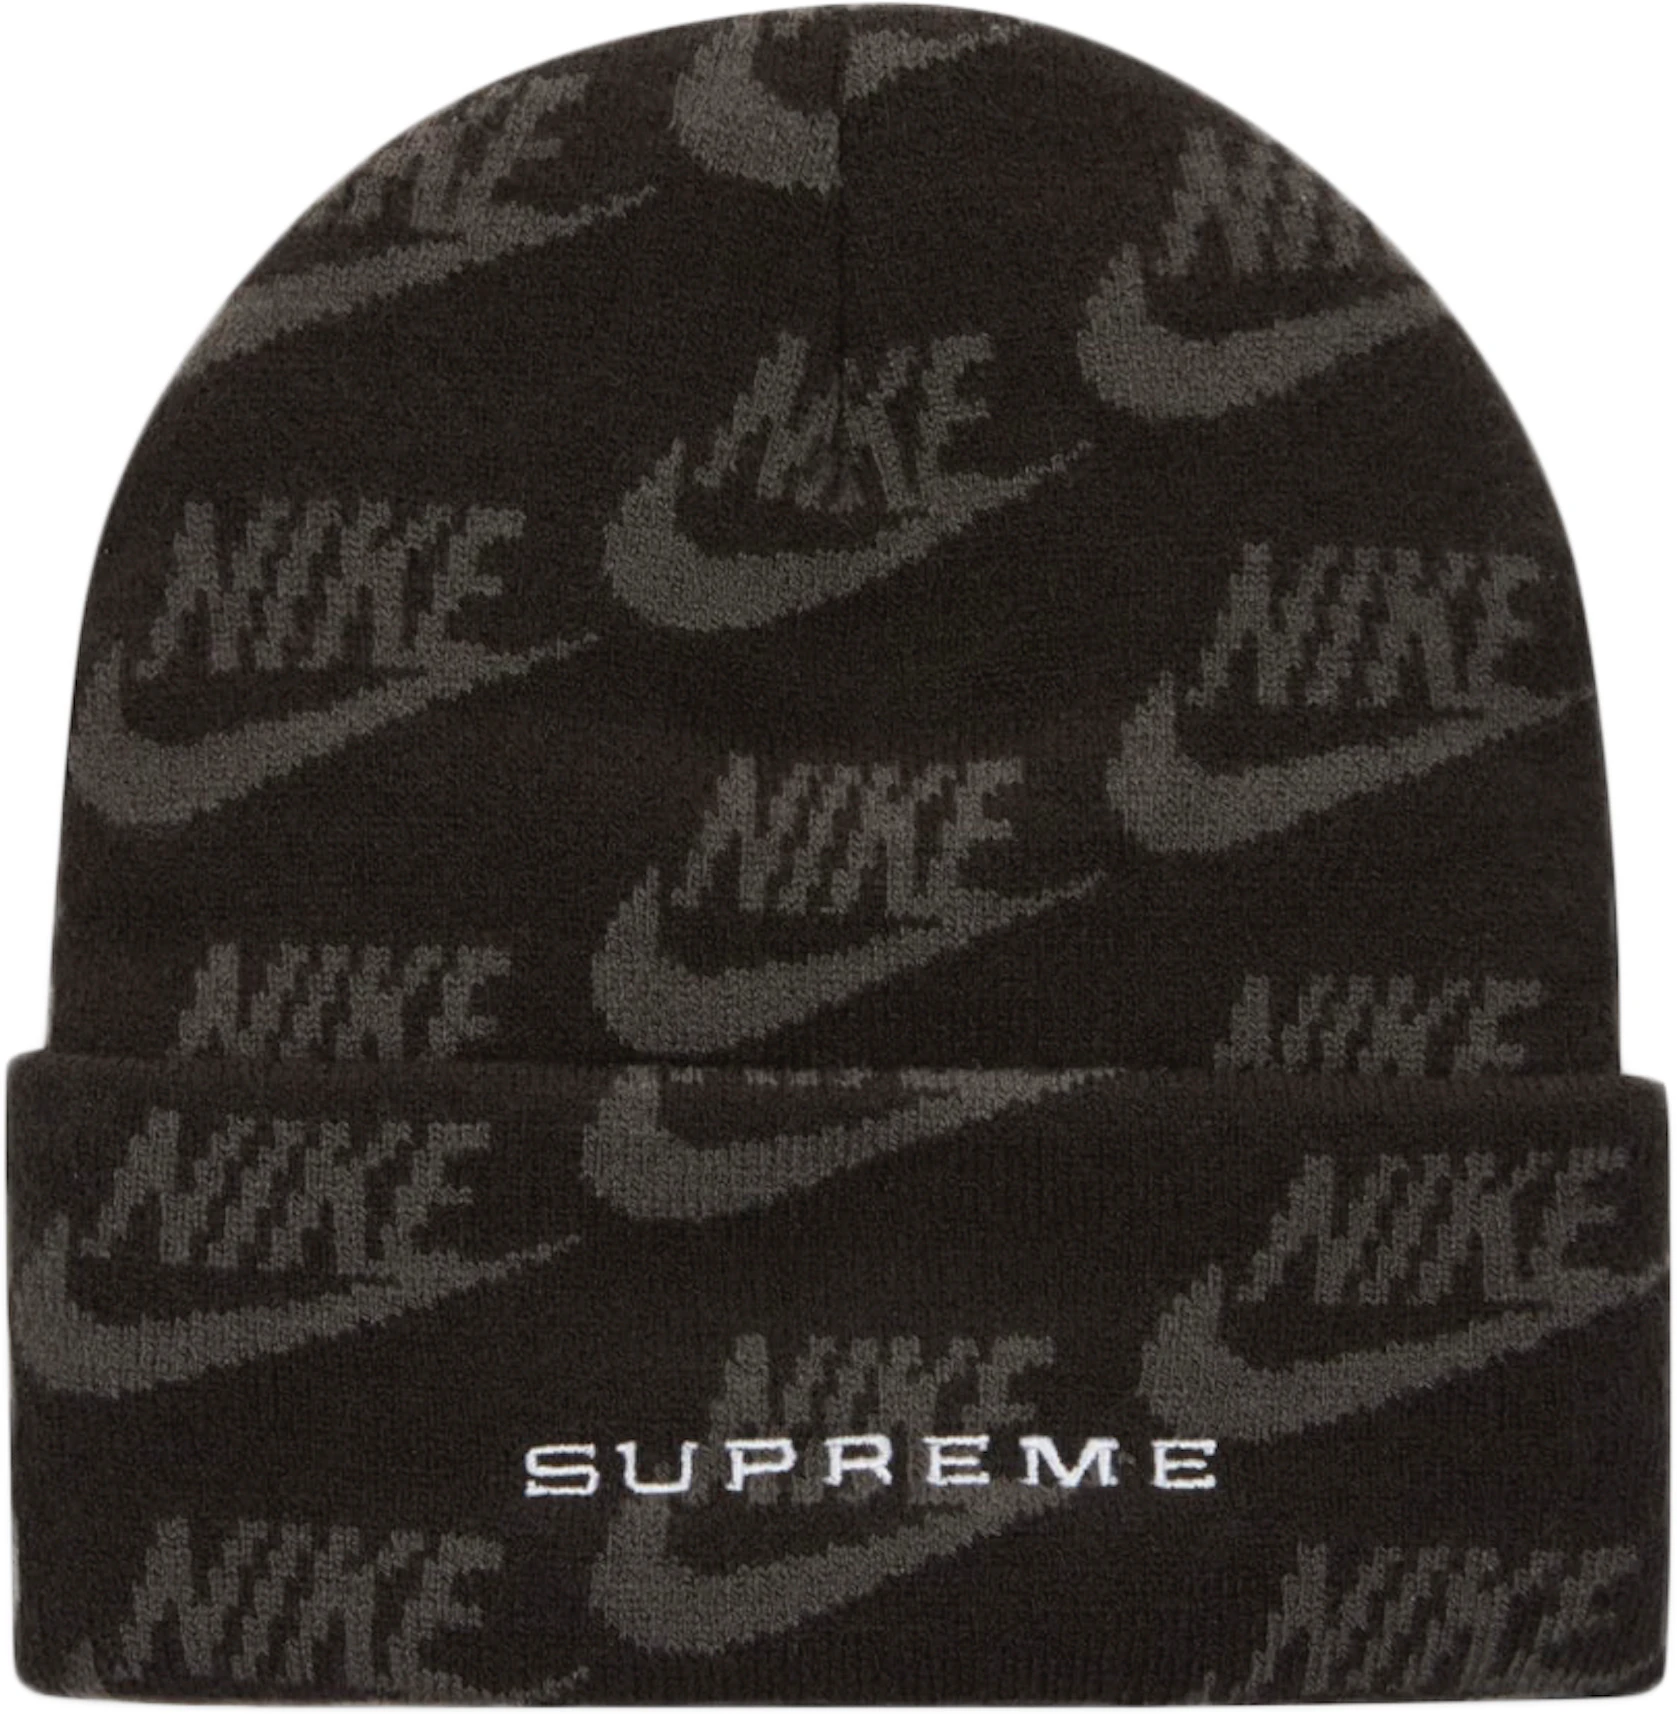 Supreme Nike Jacquard Logos Black - SS21 - ES